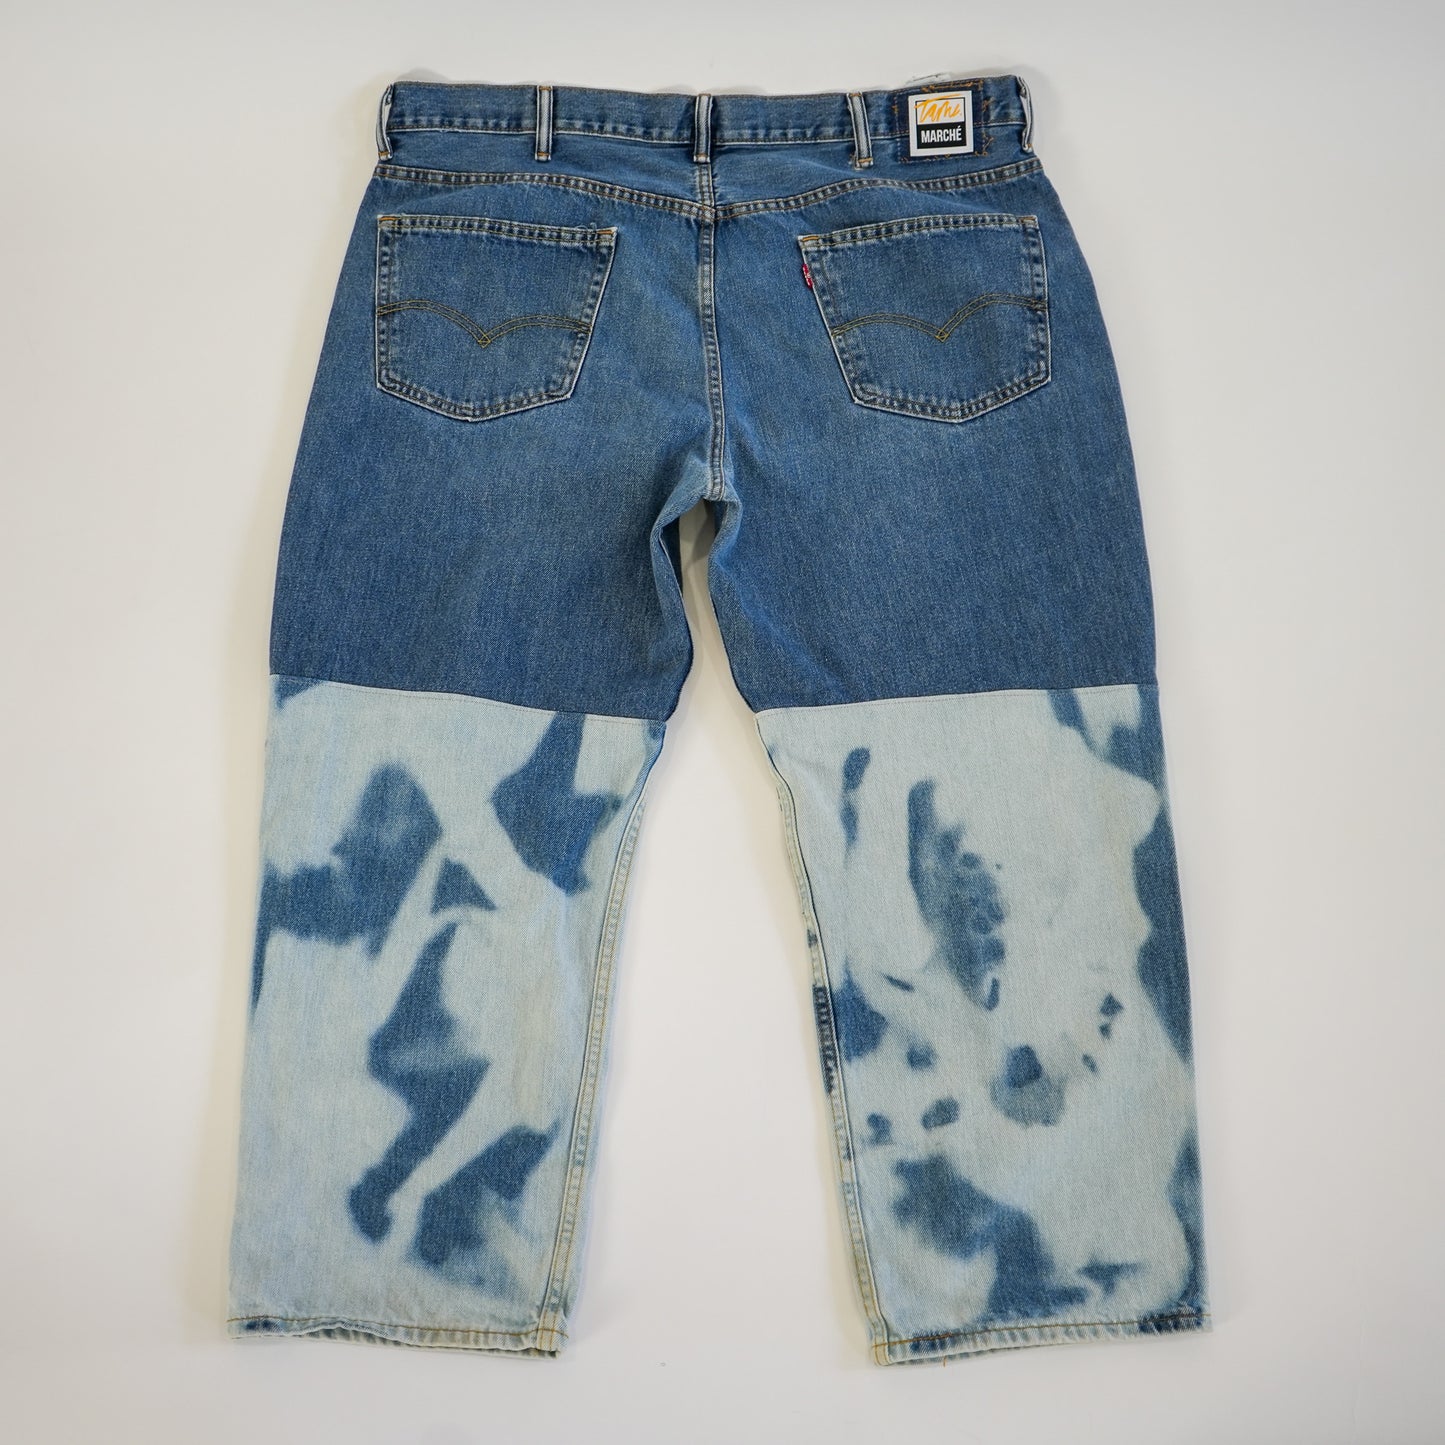 Brocade & Denim Patchwork Tie-Dyed Jeans (W 44)